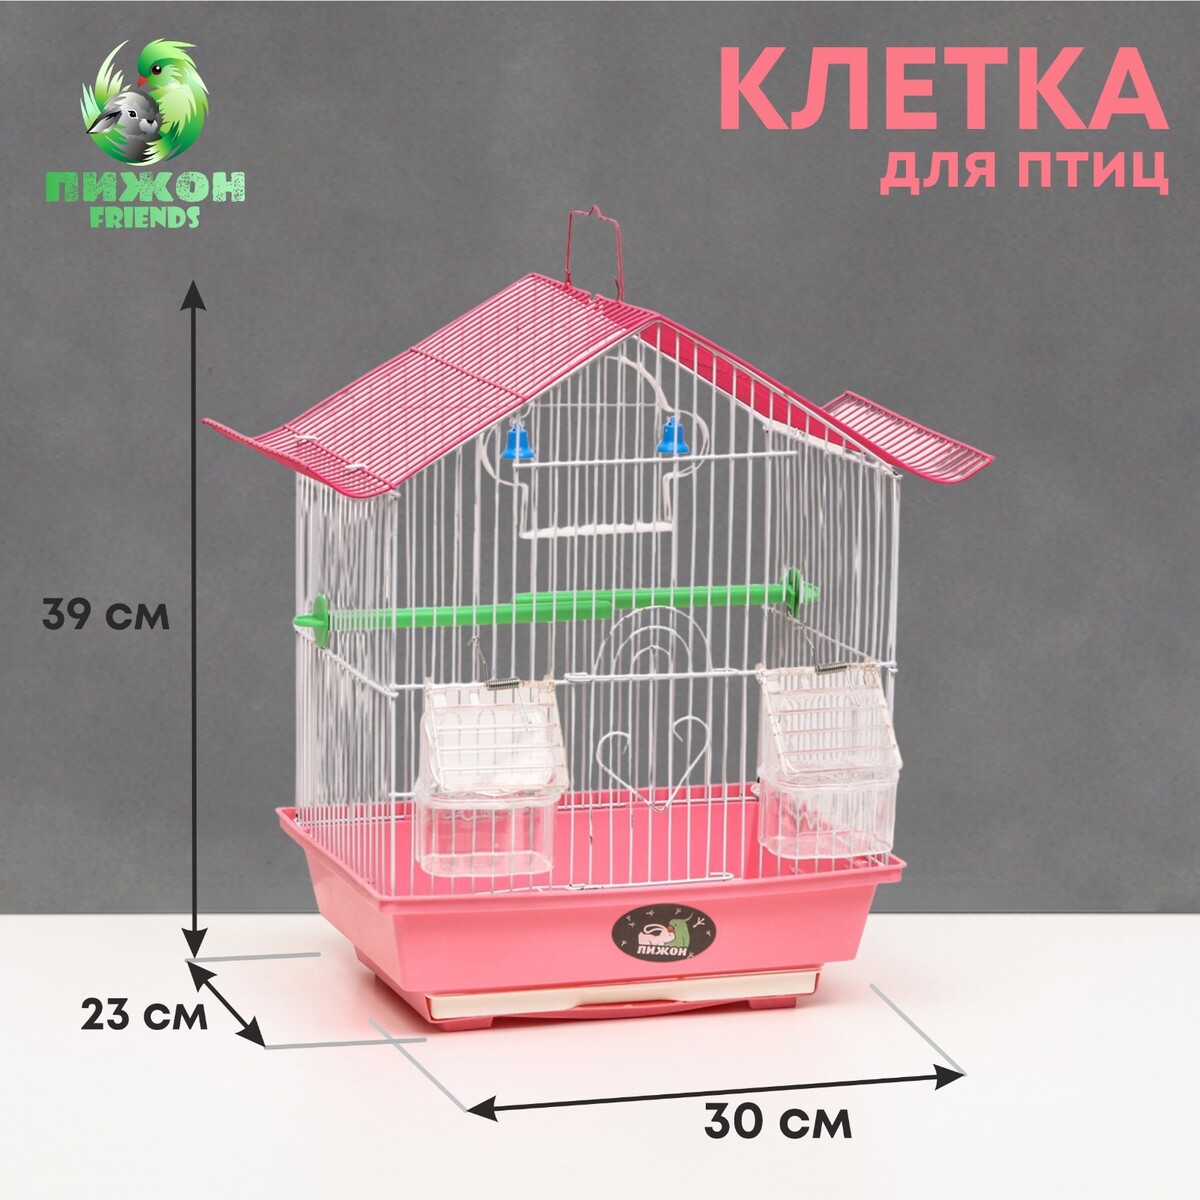 Клетка для птиц укомплектованная bd-1/1d, 30 х 23 х 39 см, розовая клетка для грызунов укомплектованная 23 х 19 х 28 см розовая